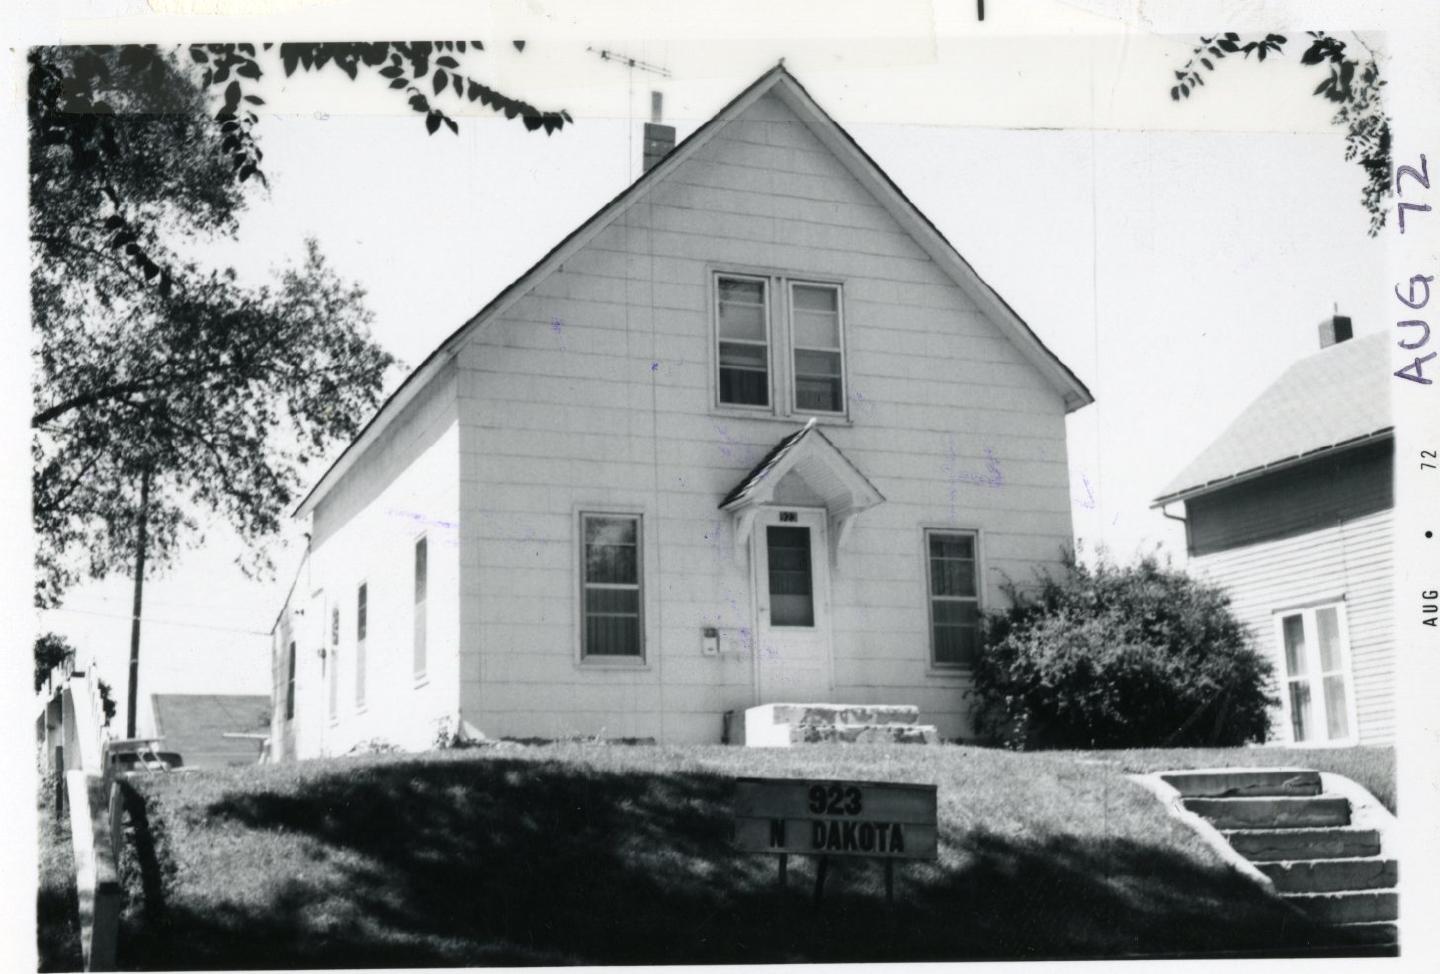 Photo of 923 N. Dakota Ave., 1950s